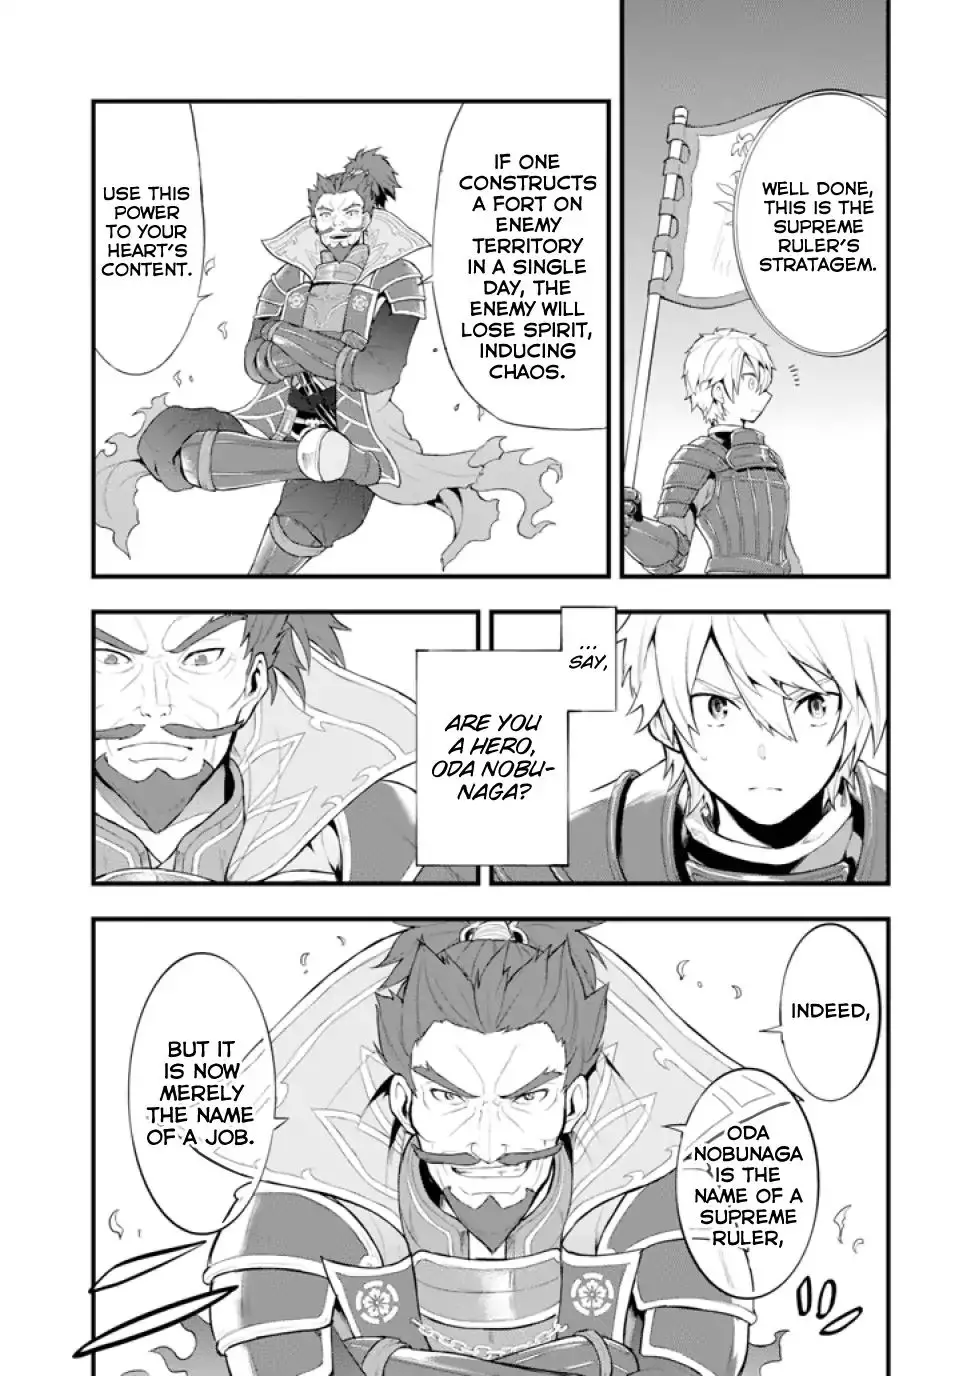 Mysterious Job Called Oda Nobunaga - 3 page 16